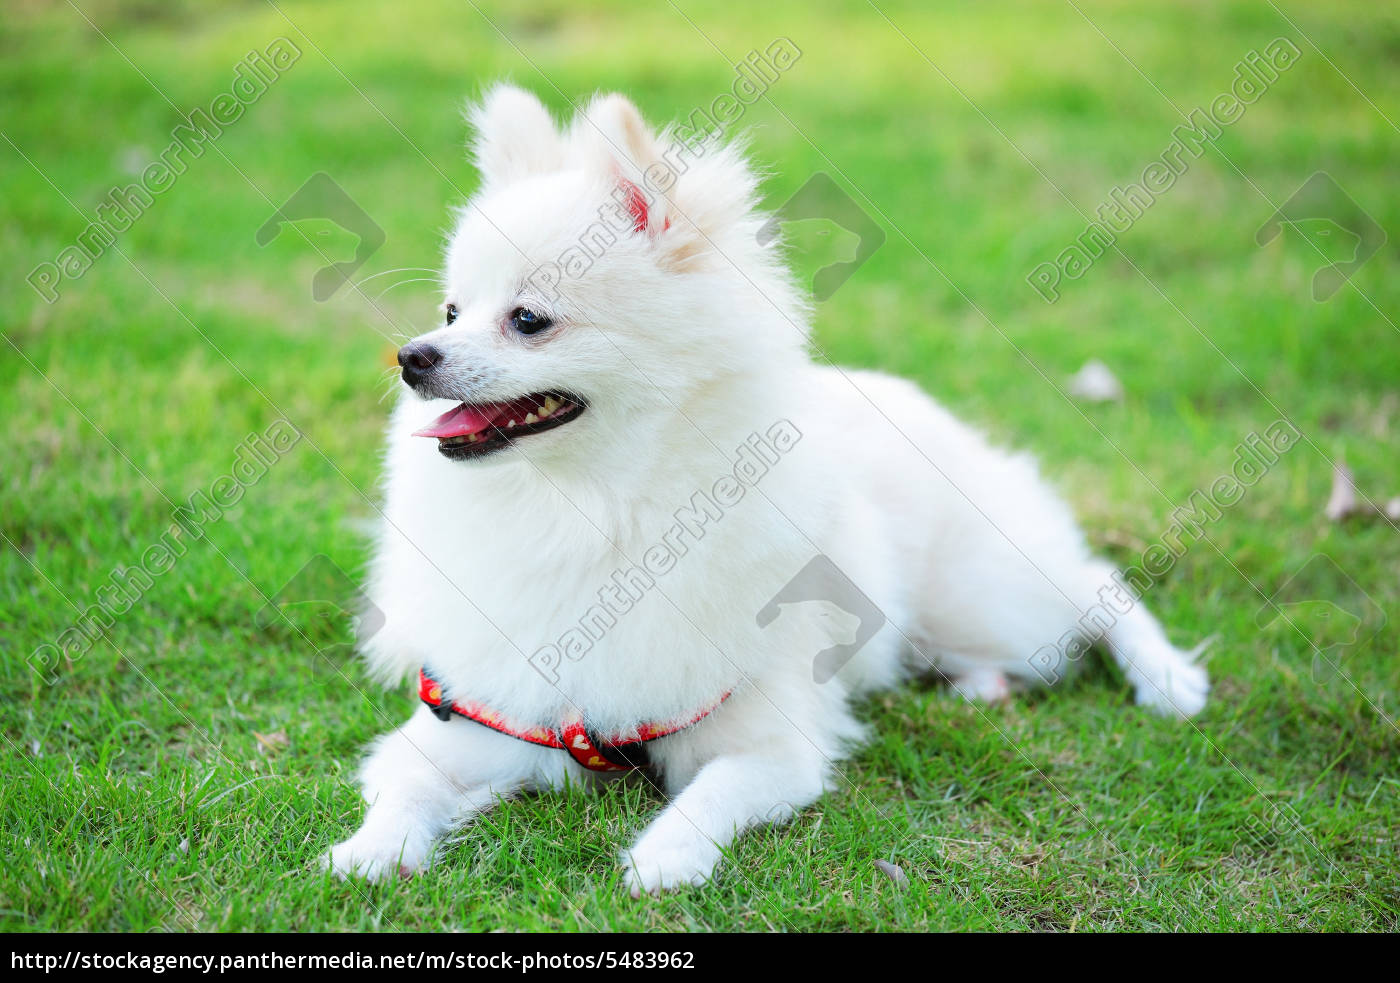 Adorable Pomeranian Dog Images